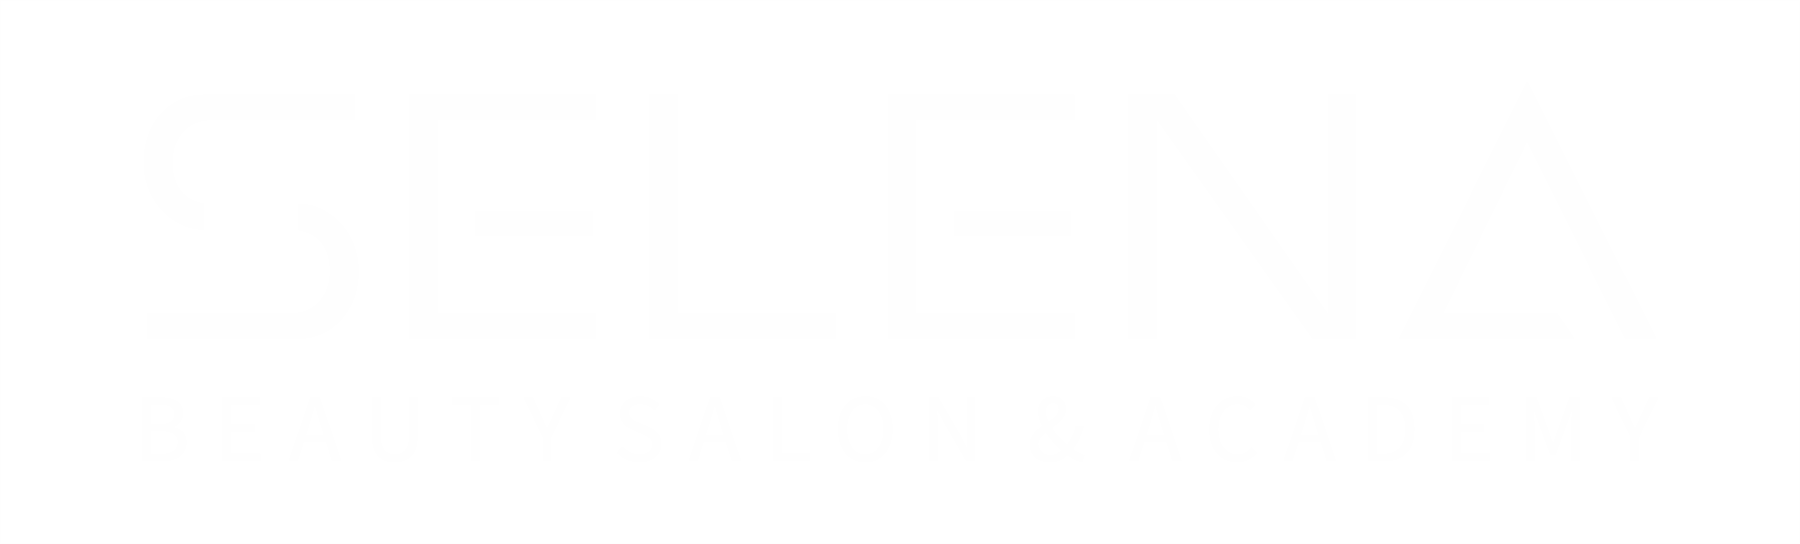 Salon Selena